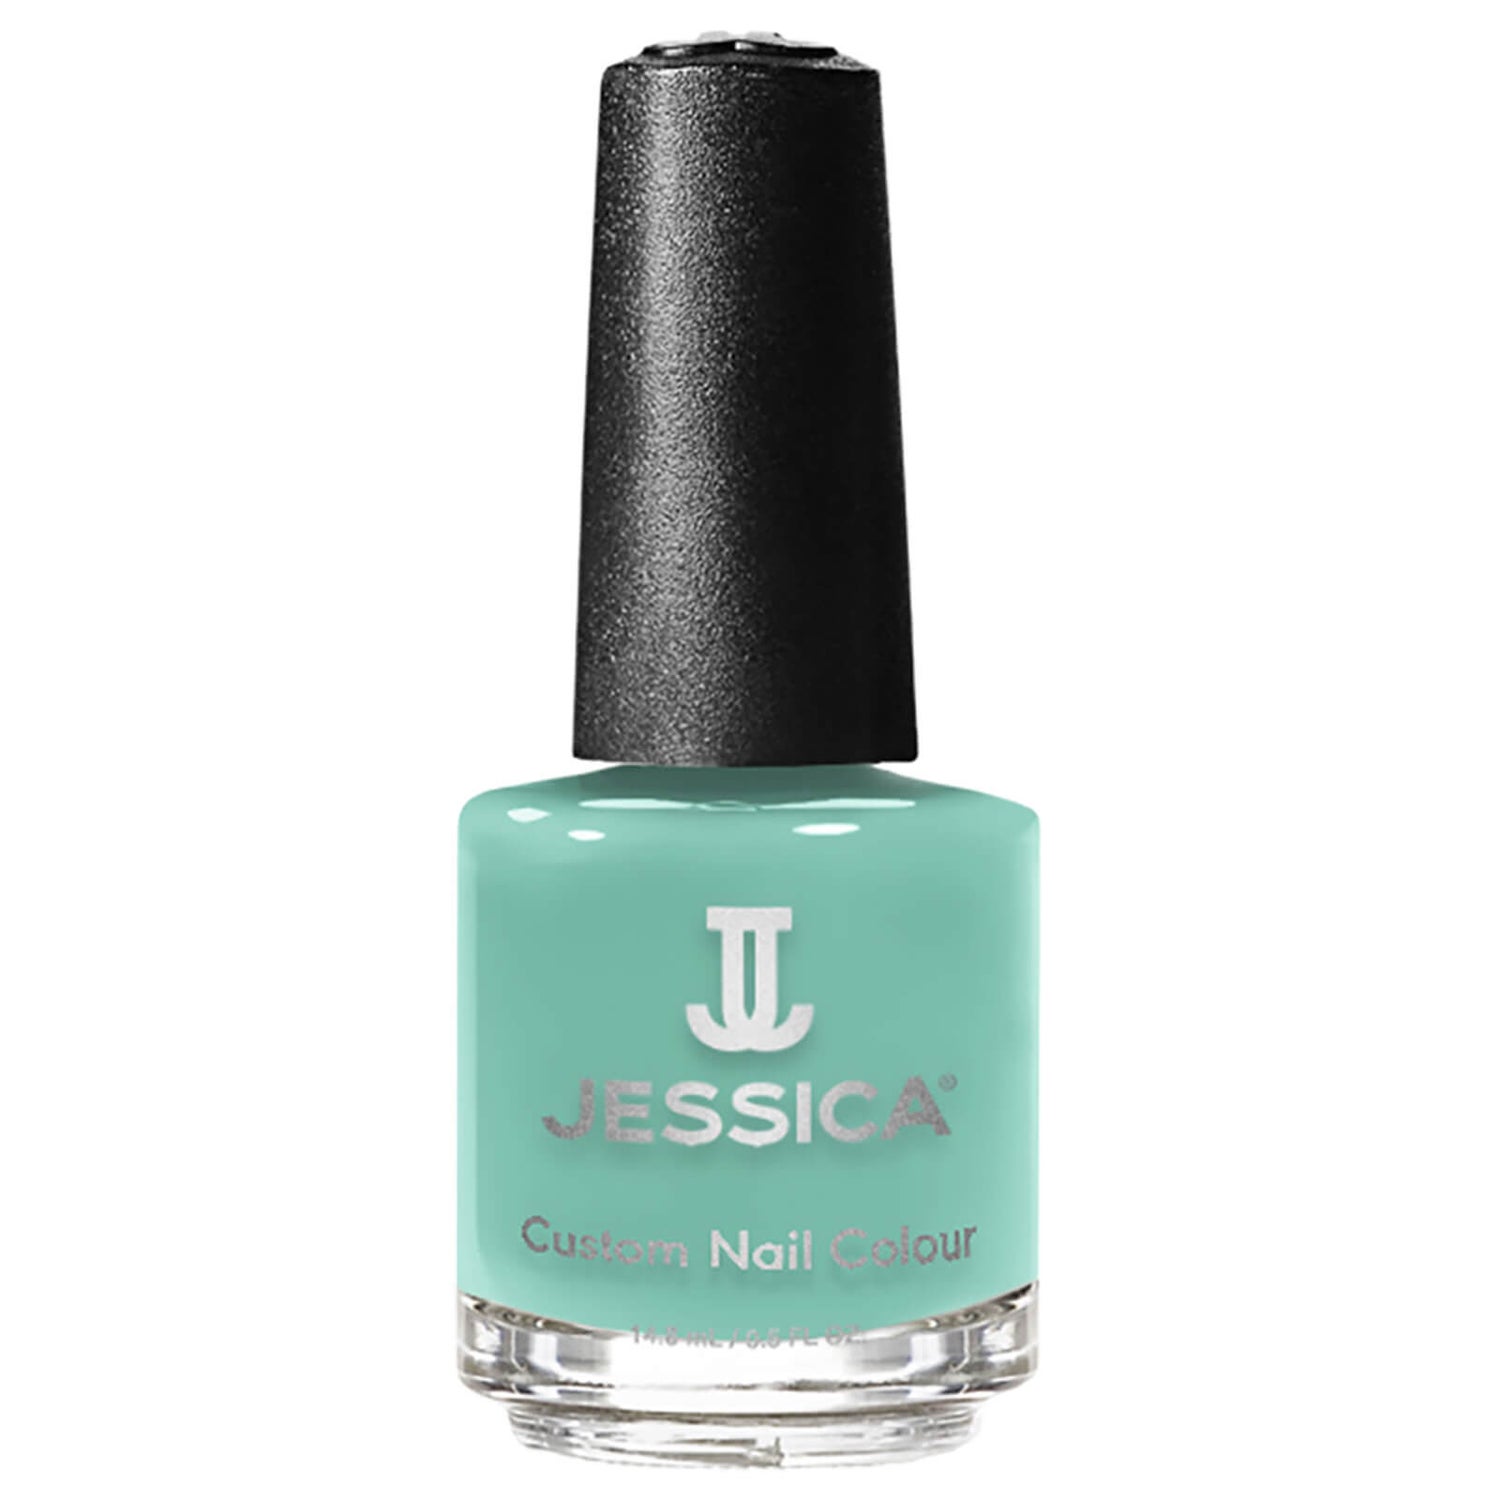 Esmalte de uñas Custom Nail Colour Flower Crown de Jessica 15 ml